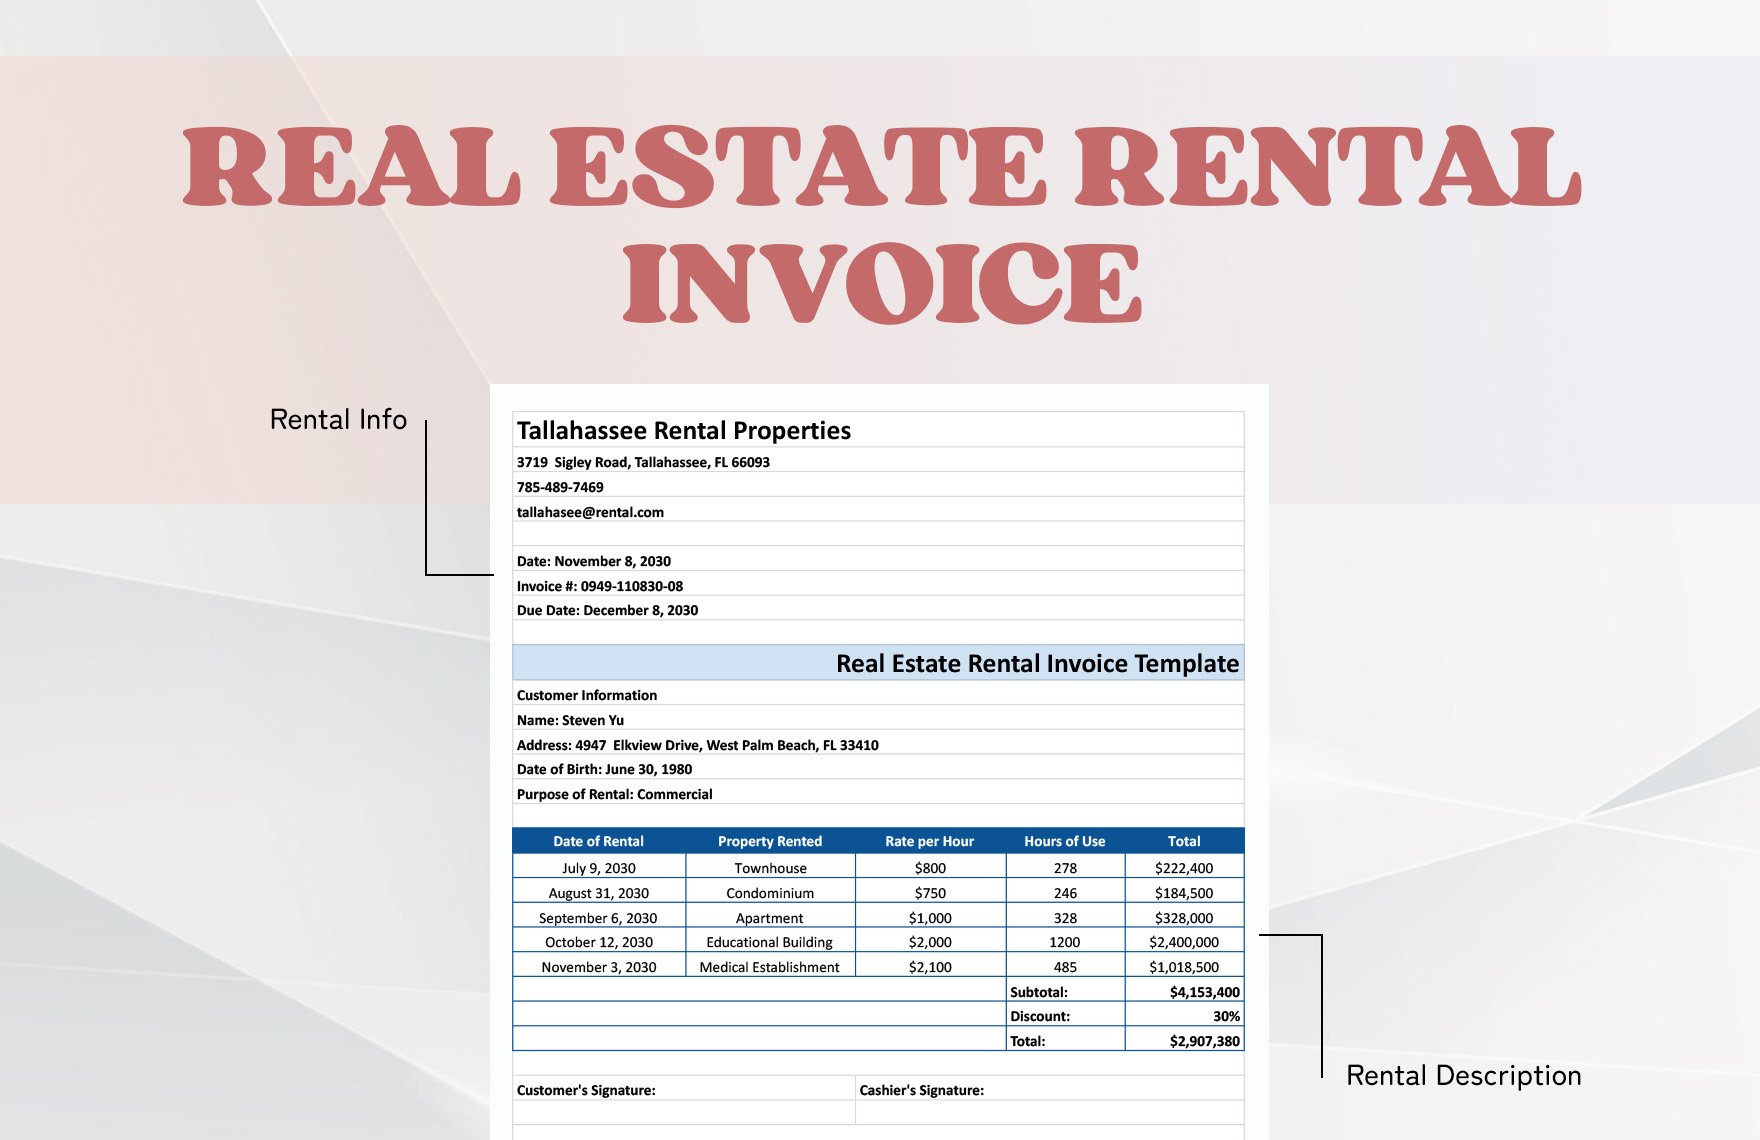 Real Estate Rental Invoice Sample